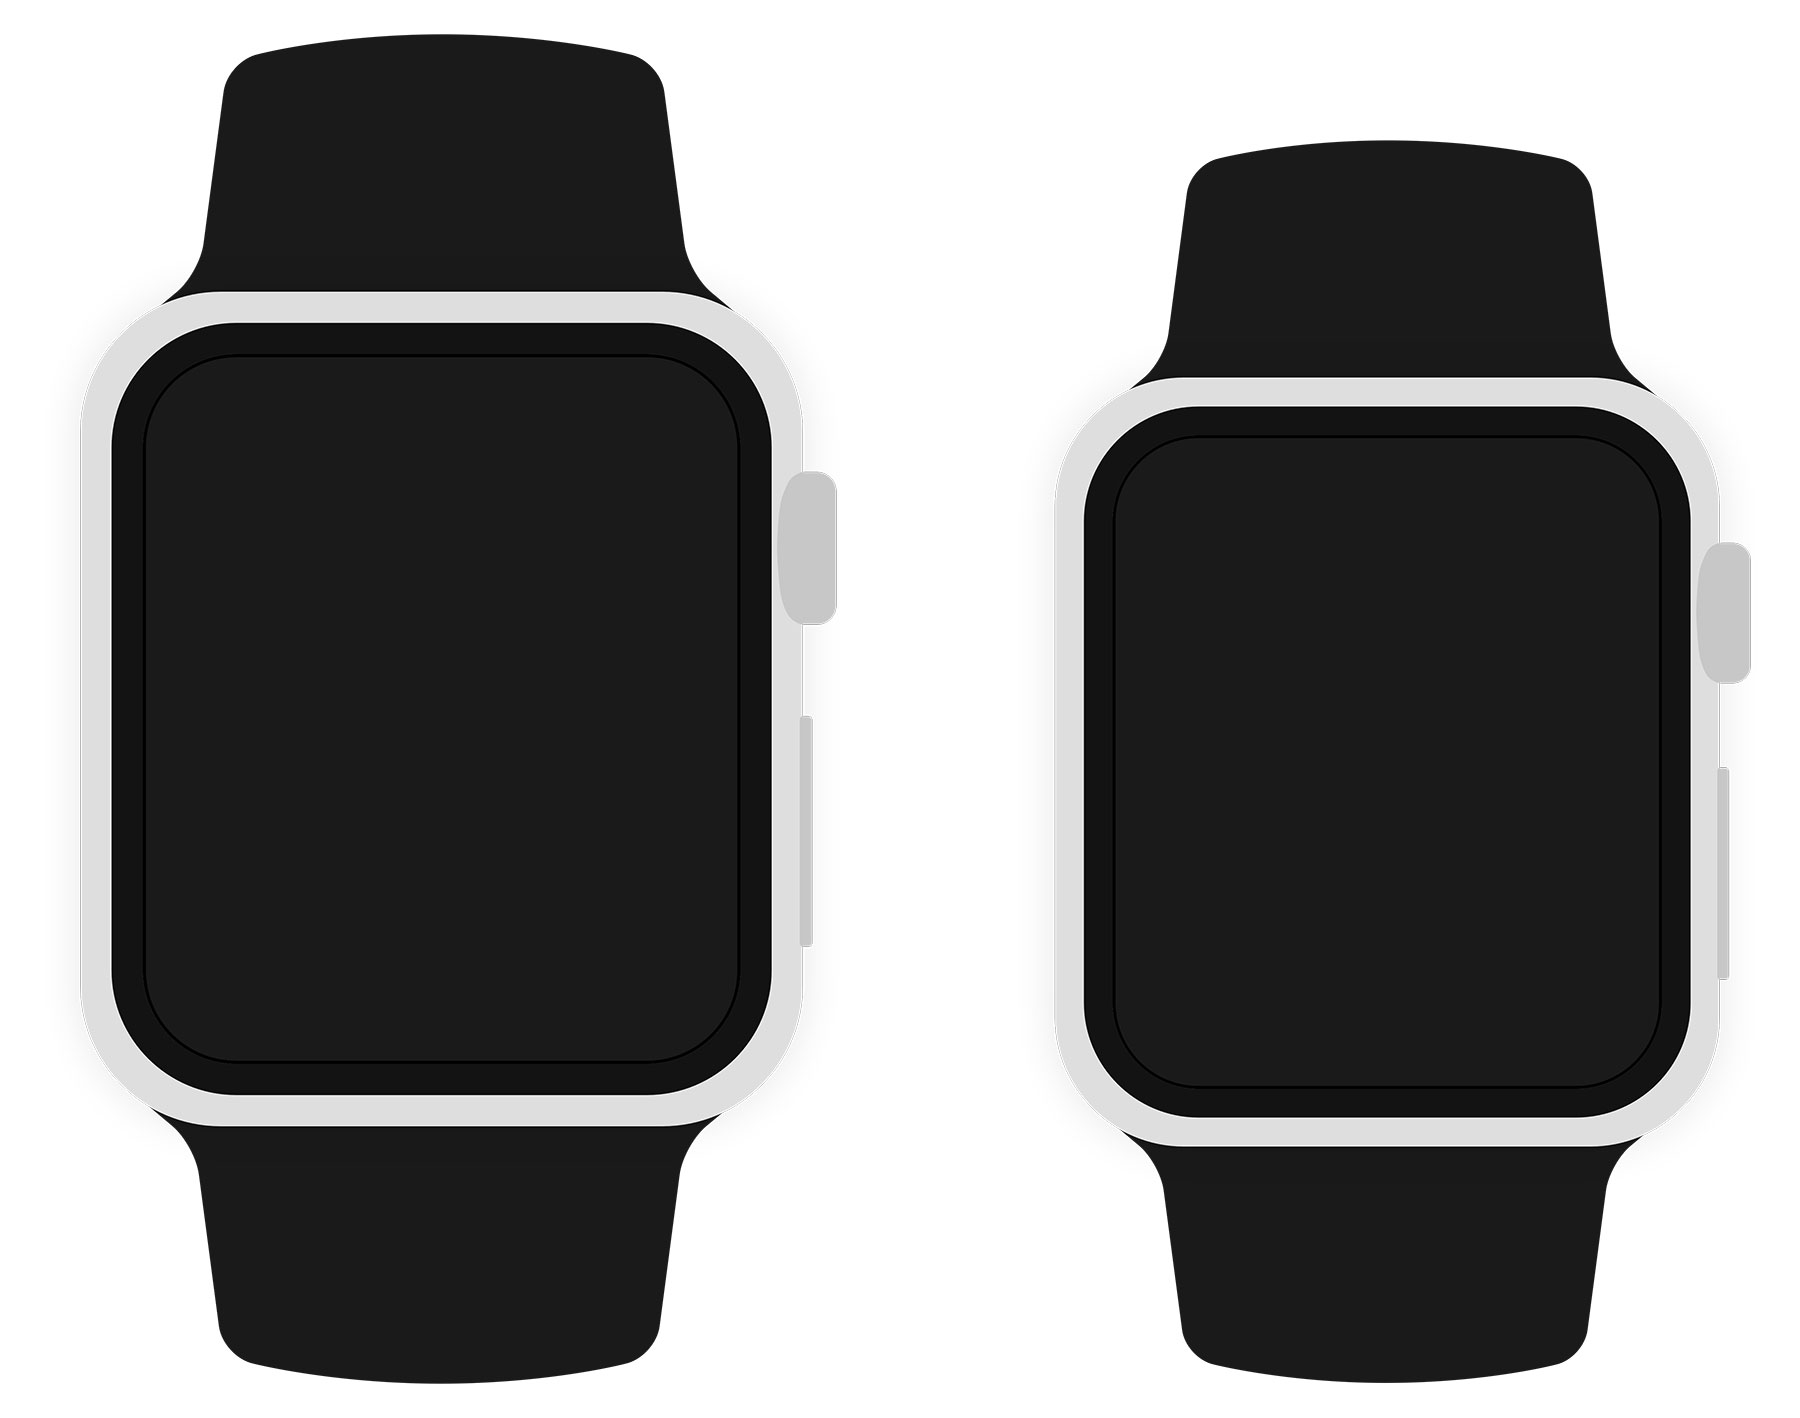 Apple Watch Simple Mockups